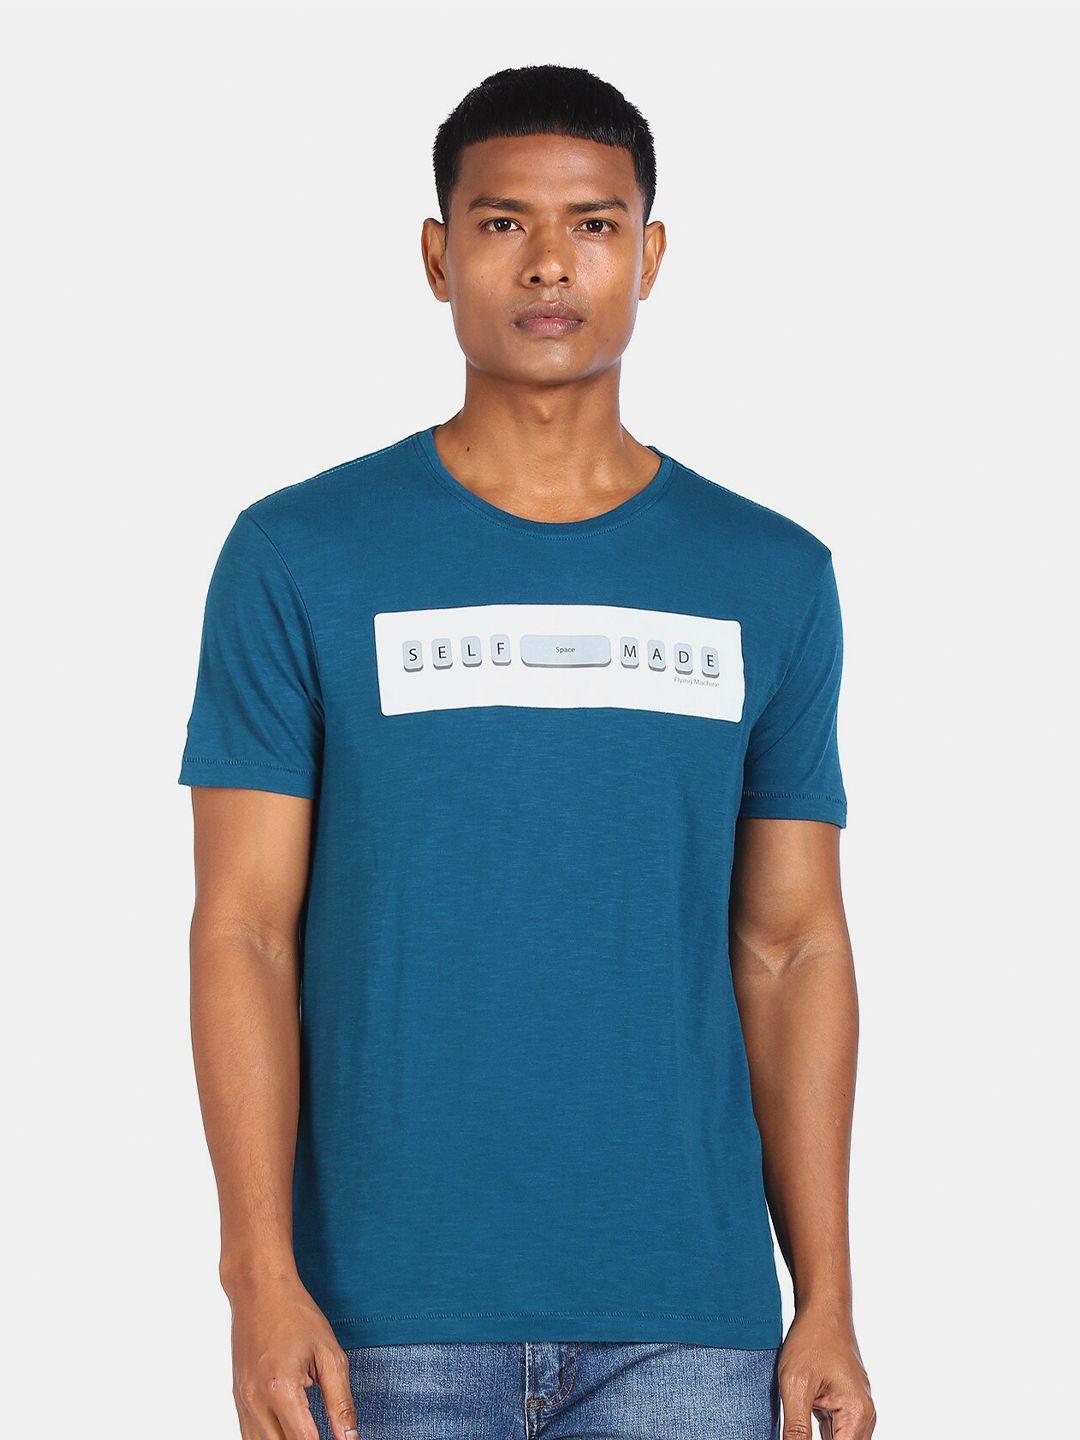 flying-machine-men-teal-blue-typography-printed-t-shirt